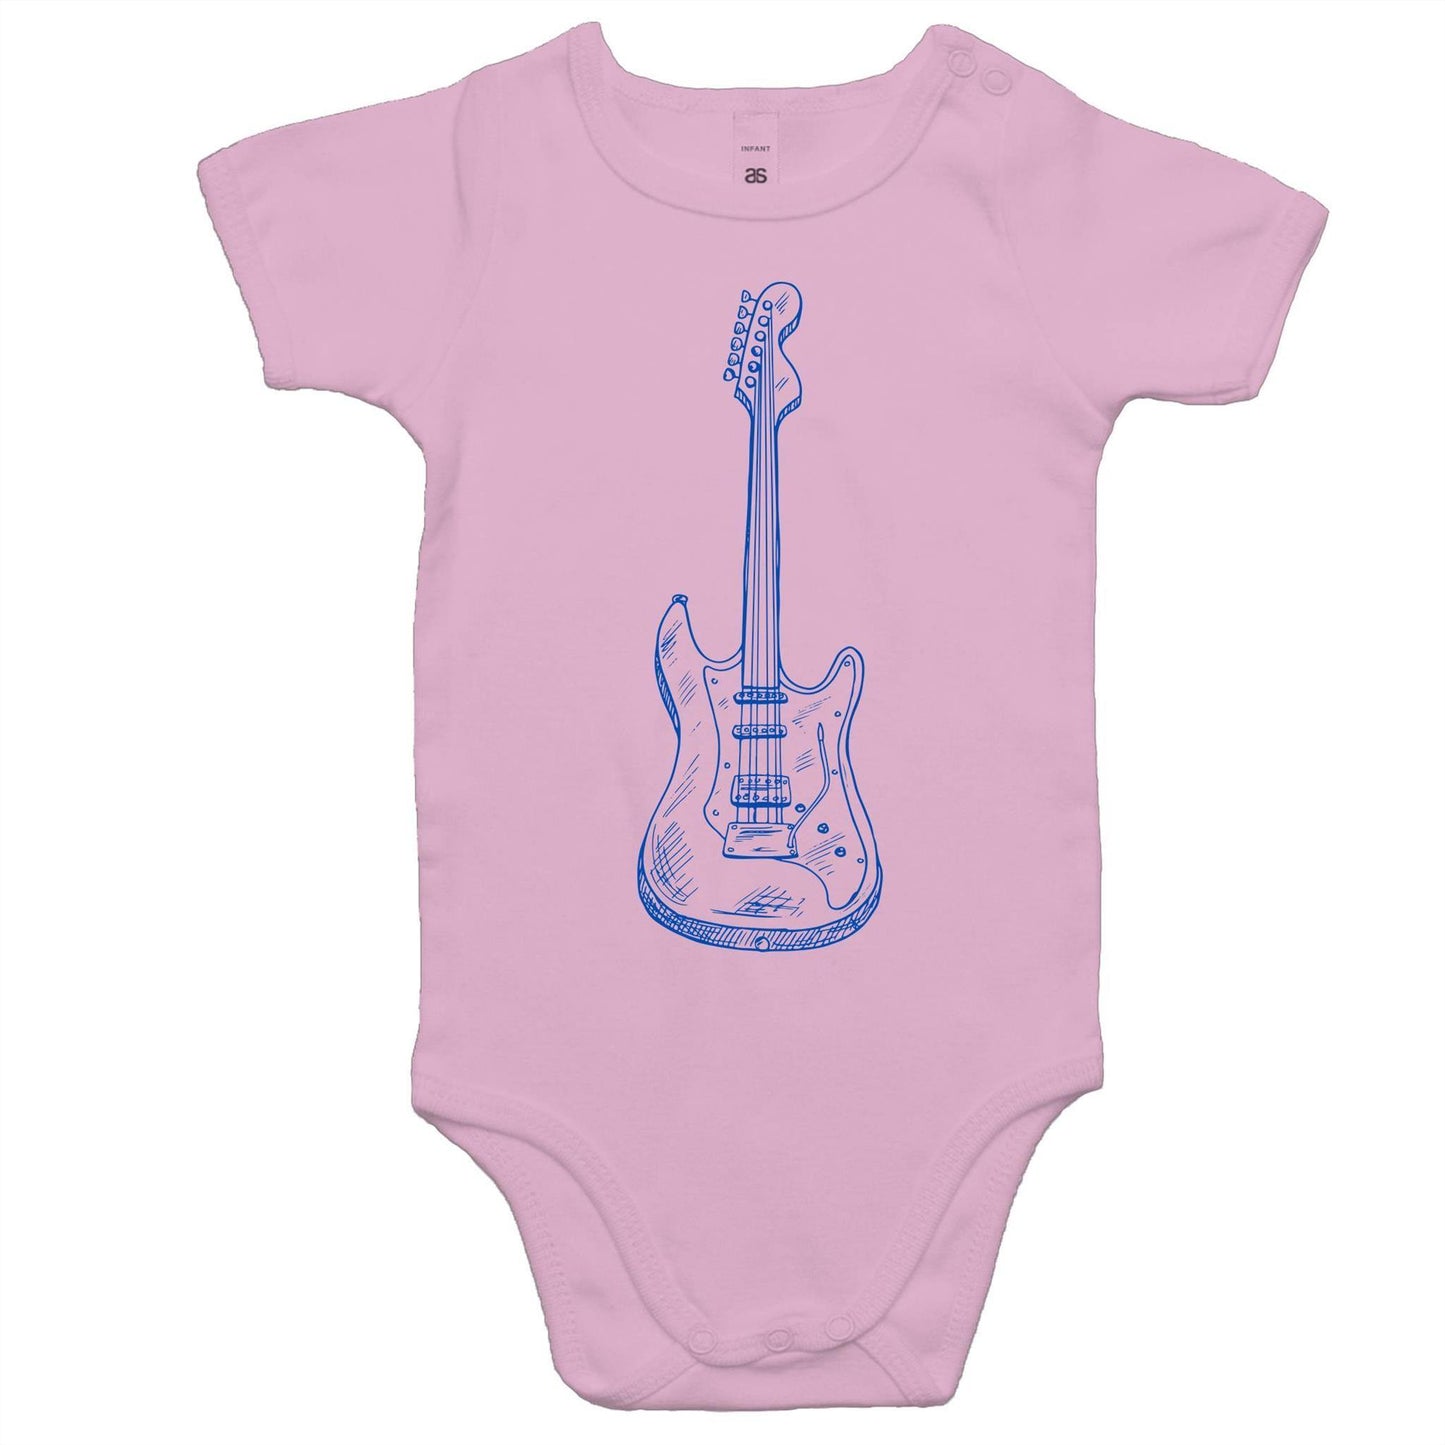 Guitar - Baby Bodysuit Pink Baby Bodysuit kids Music